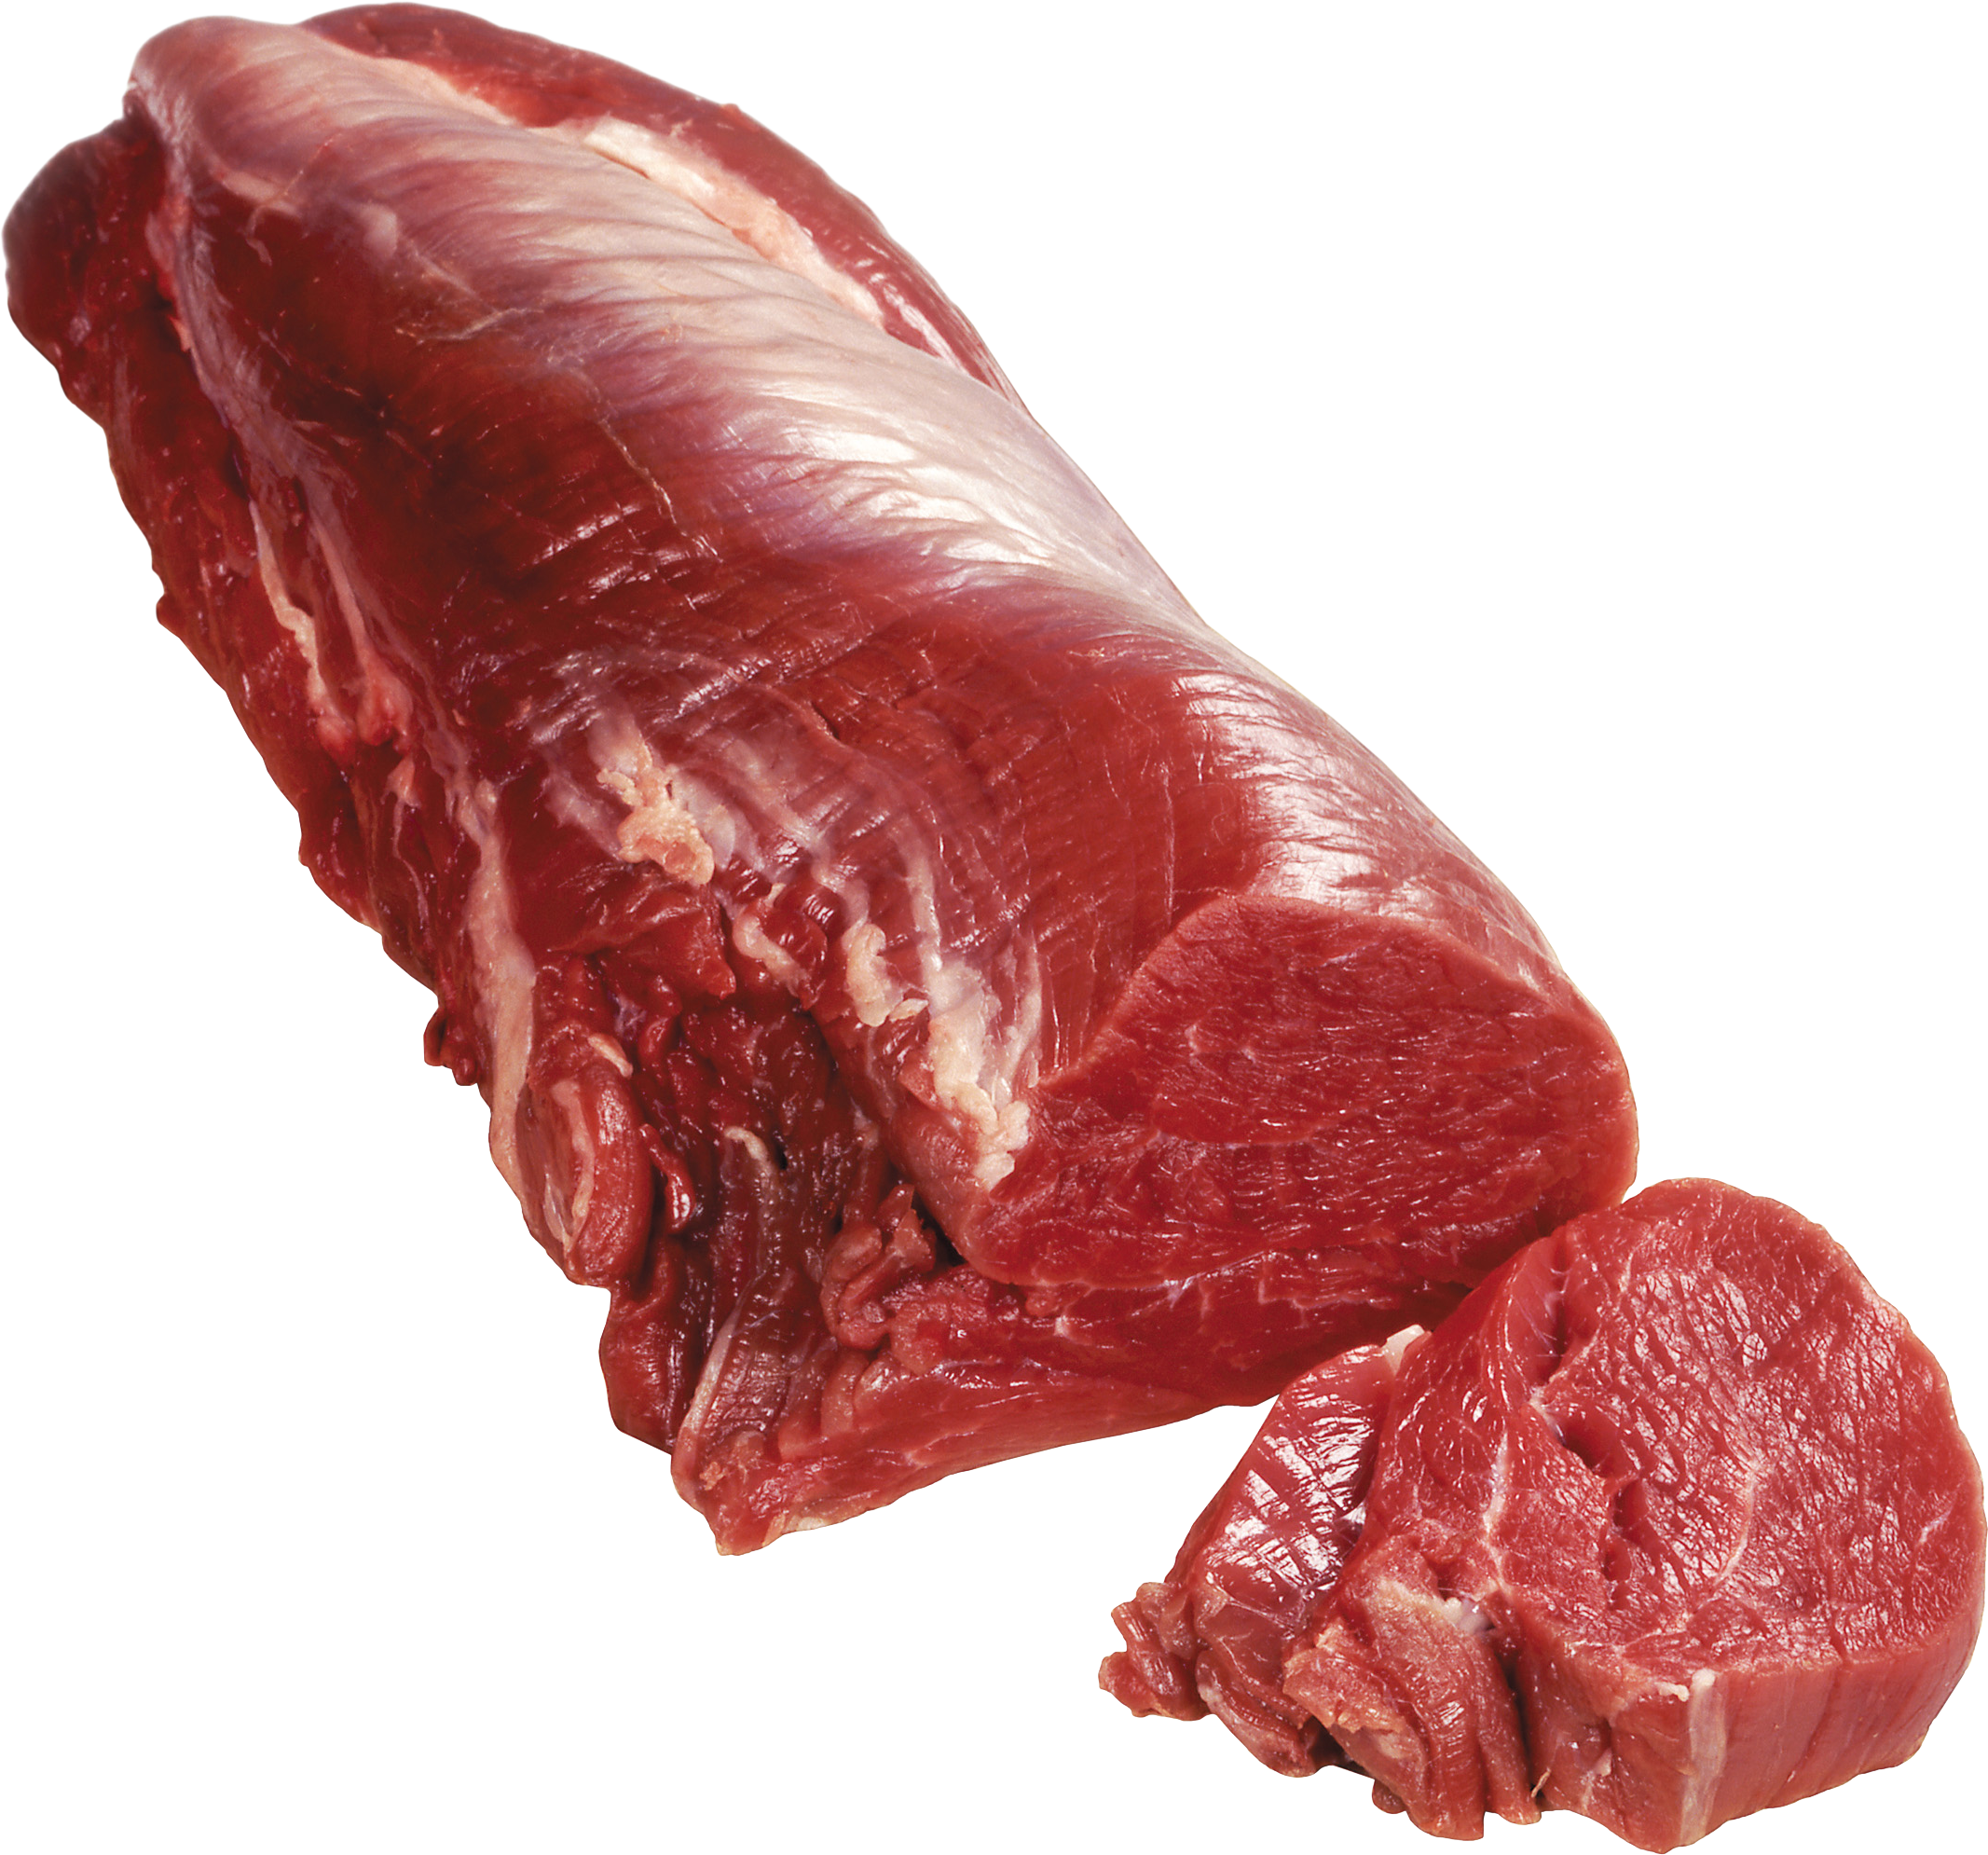 Download - Beef Wellington Meat Cut (2133x1990)